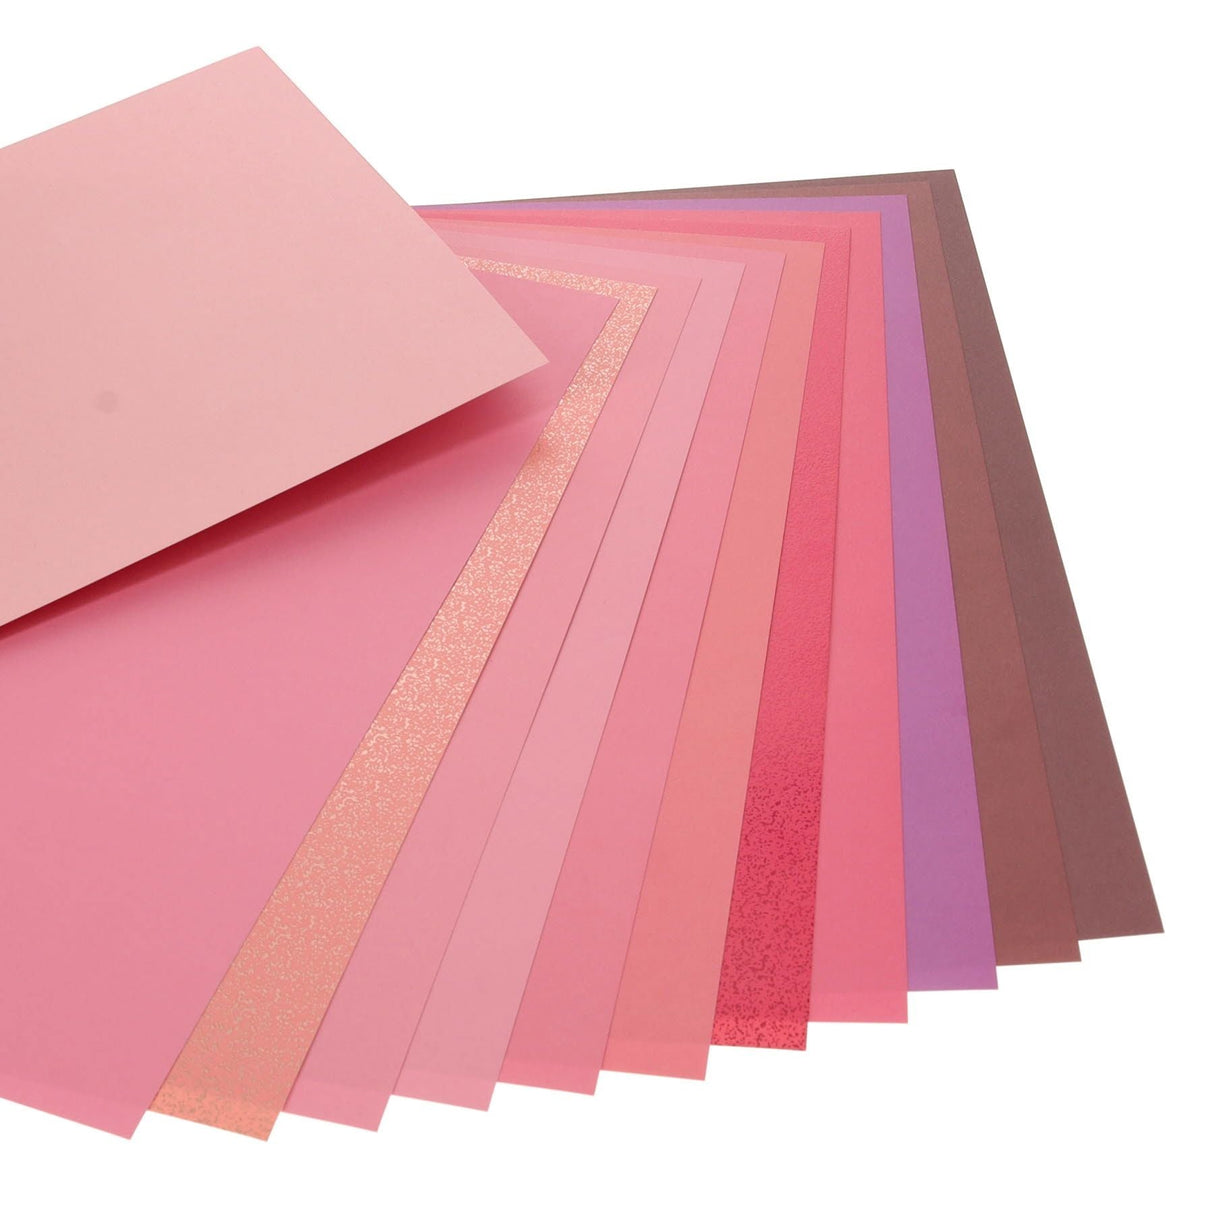 Premier Activity A4 Paper Pad - 24 Sheets - 180gsm - Shades of Pink-Craft Paper & Card-Premier|StationeryShop.co.uk